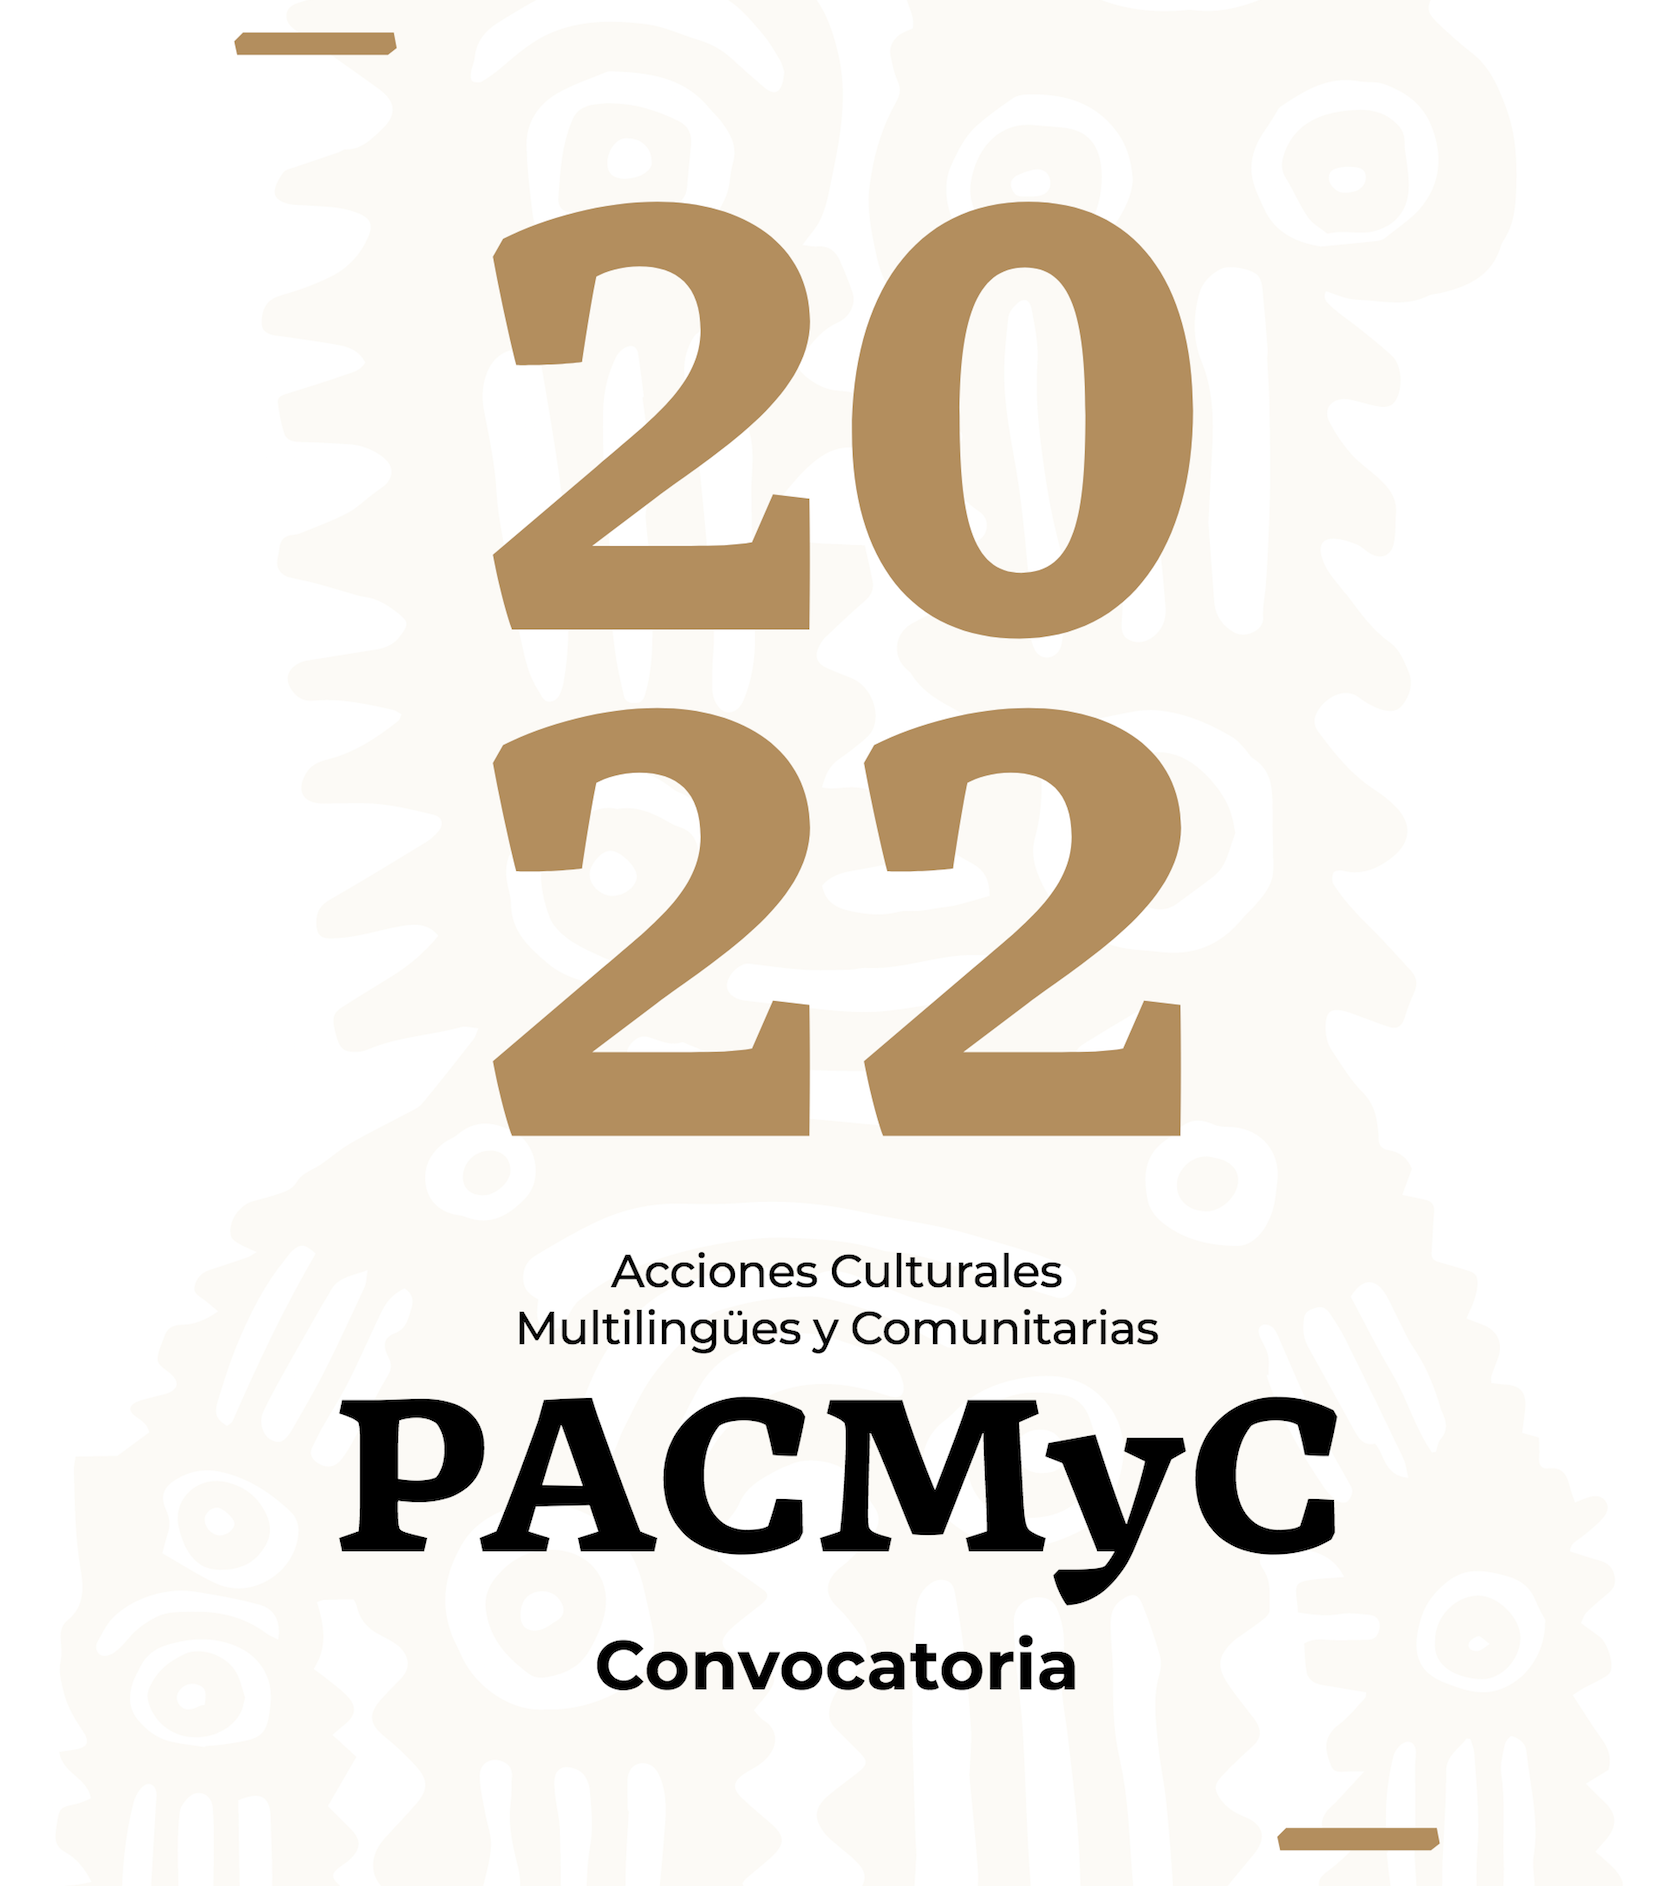 Está abierta la convocatoria PACMyC 2022